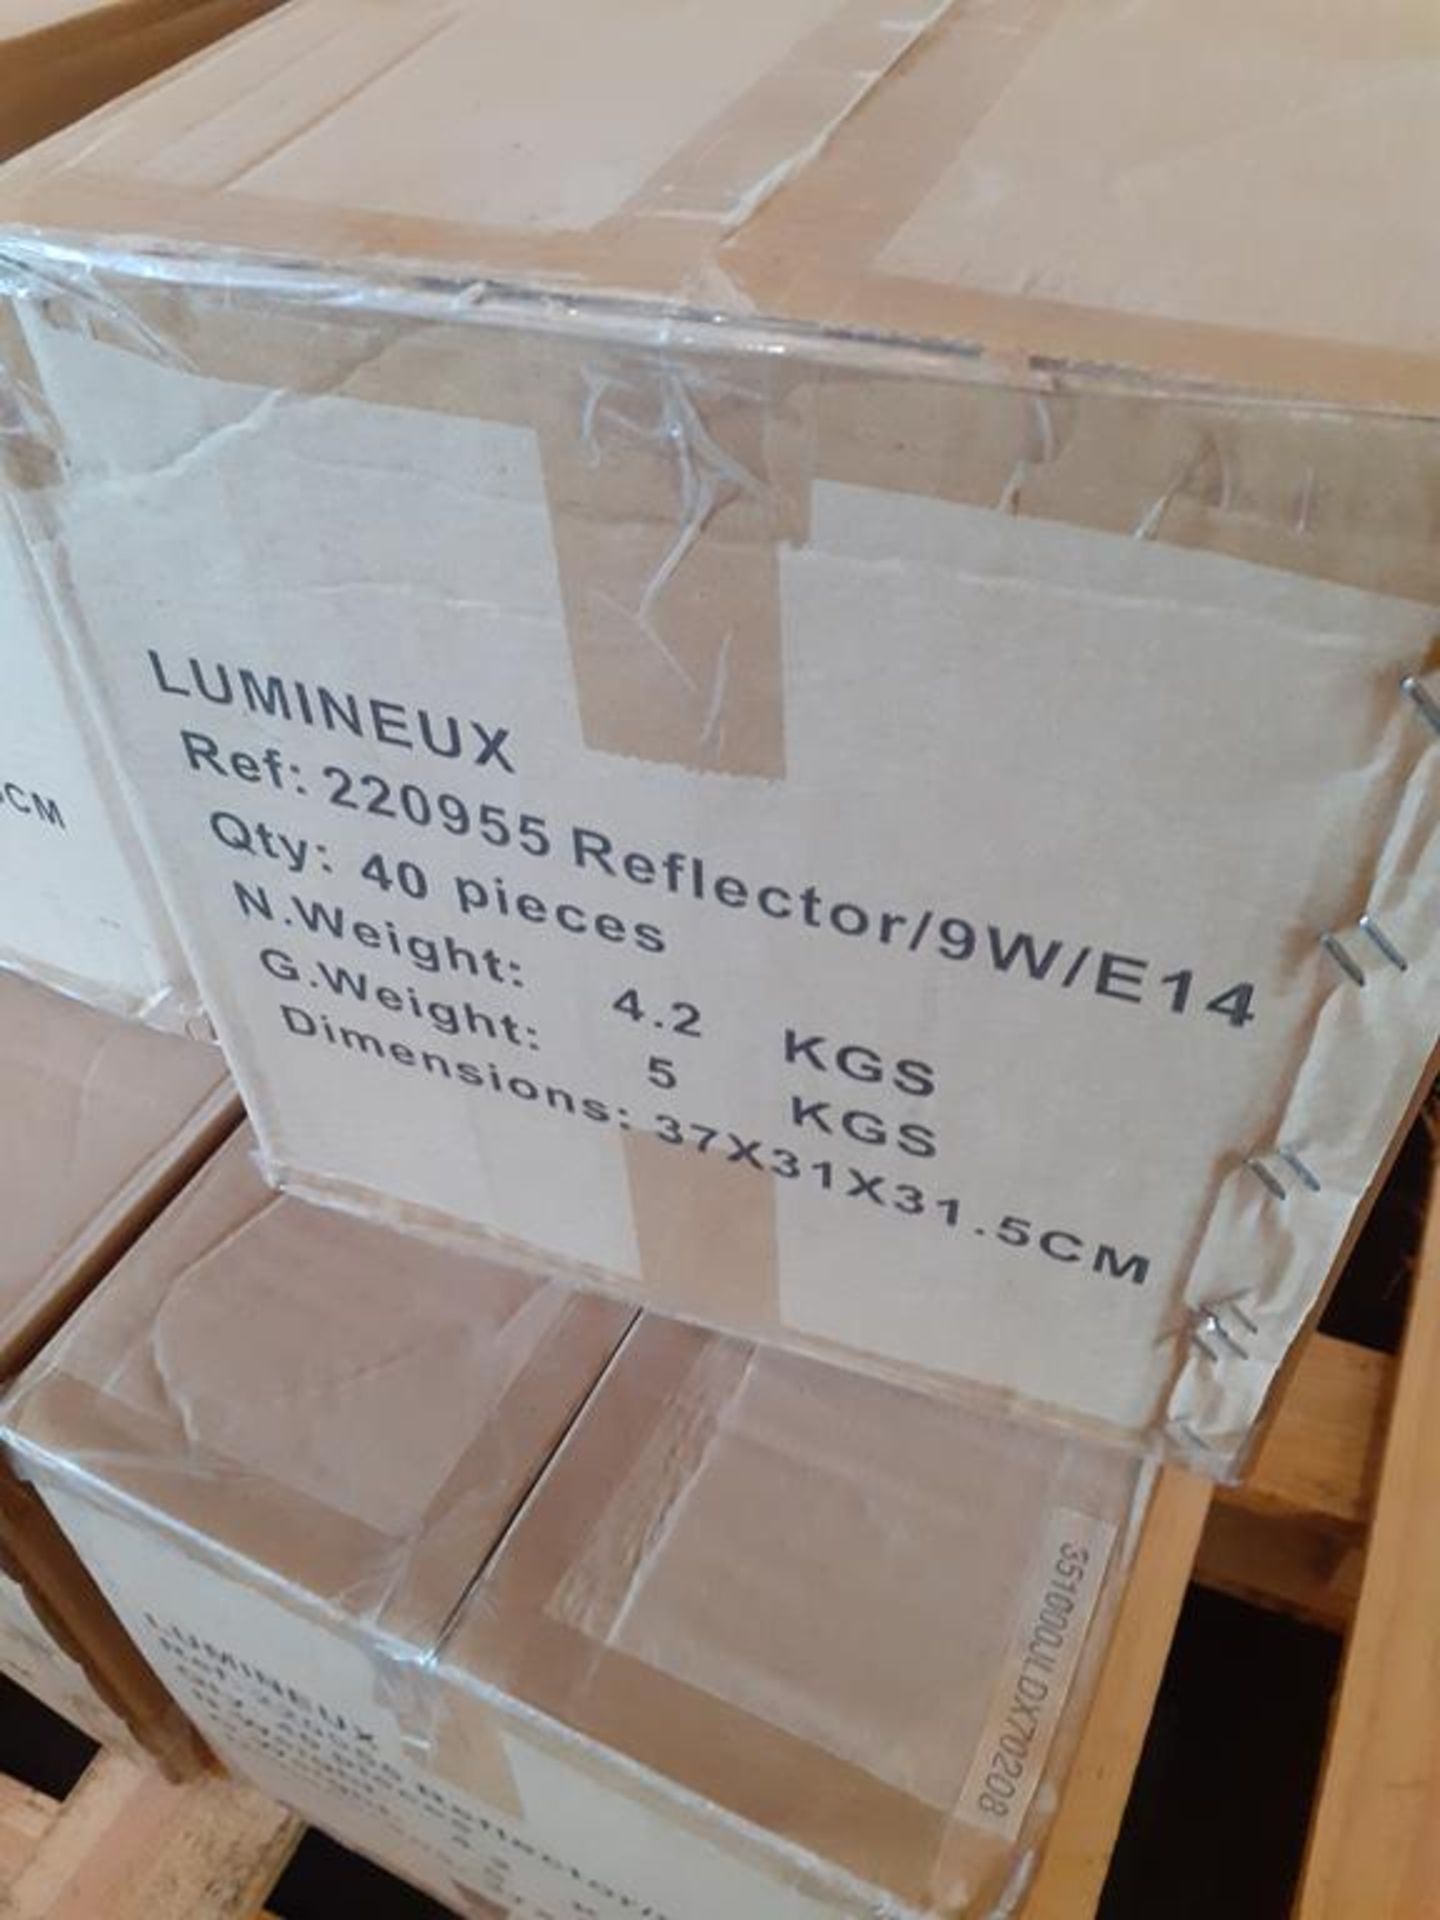 6x boxes of Lumineux Reflector 9W E14 2700K 220-240V Engery Saving Bulbs (40pcs per boxes) - Image 2 of 4